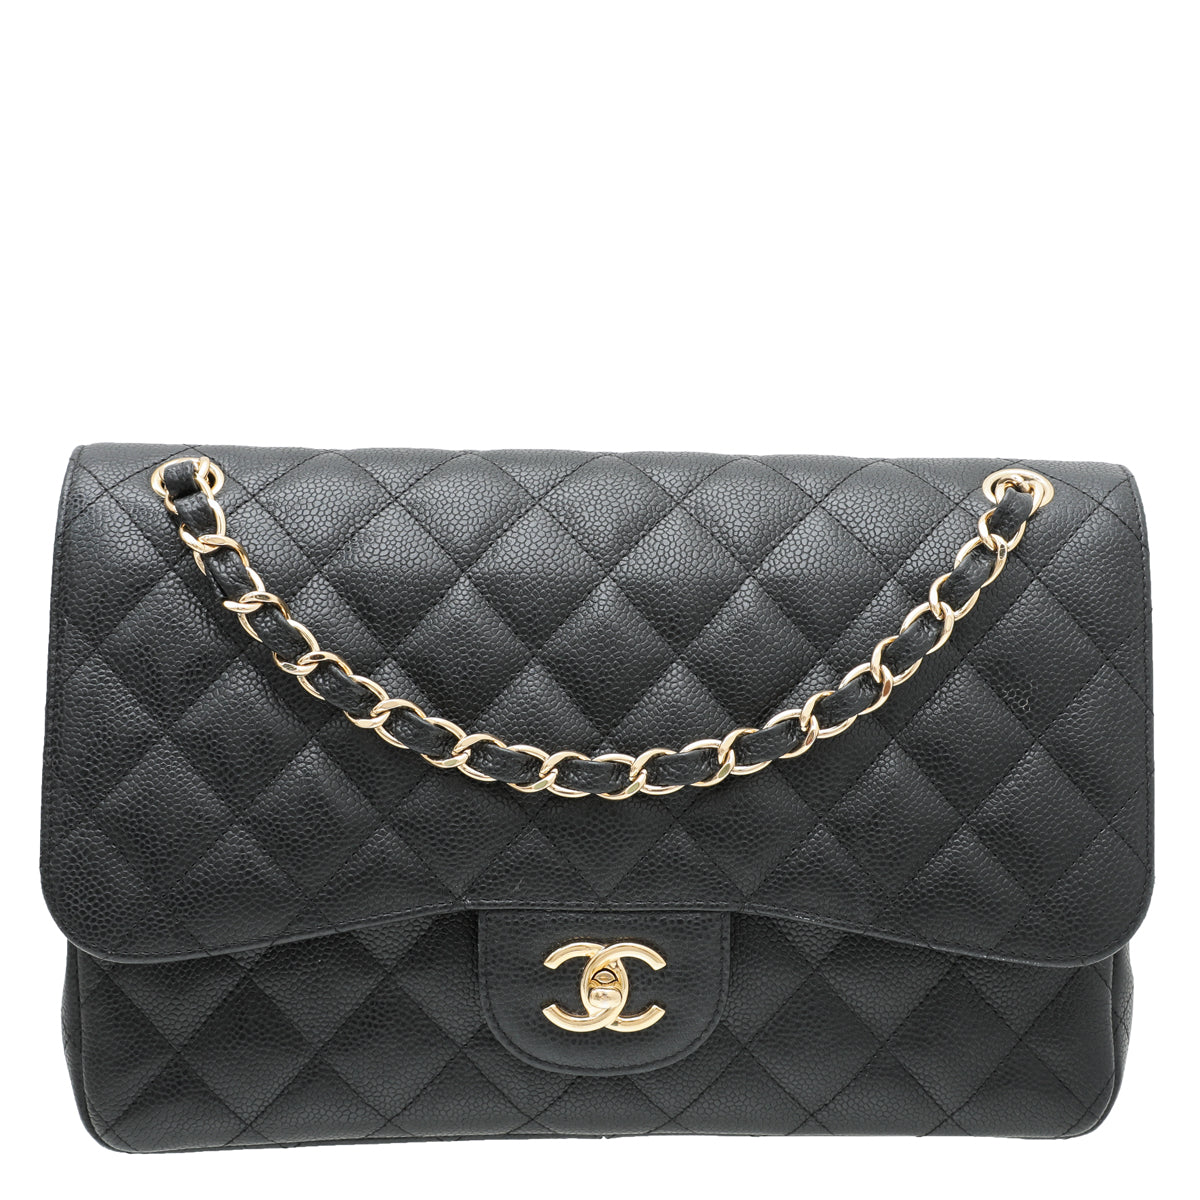 Chanel Black Classic Double Flap Bag